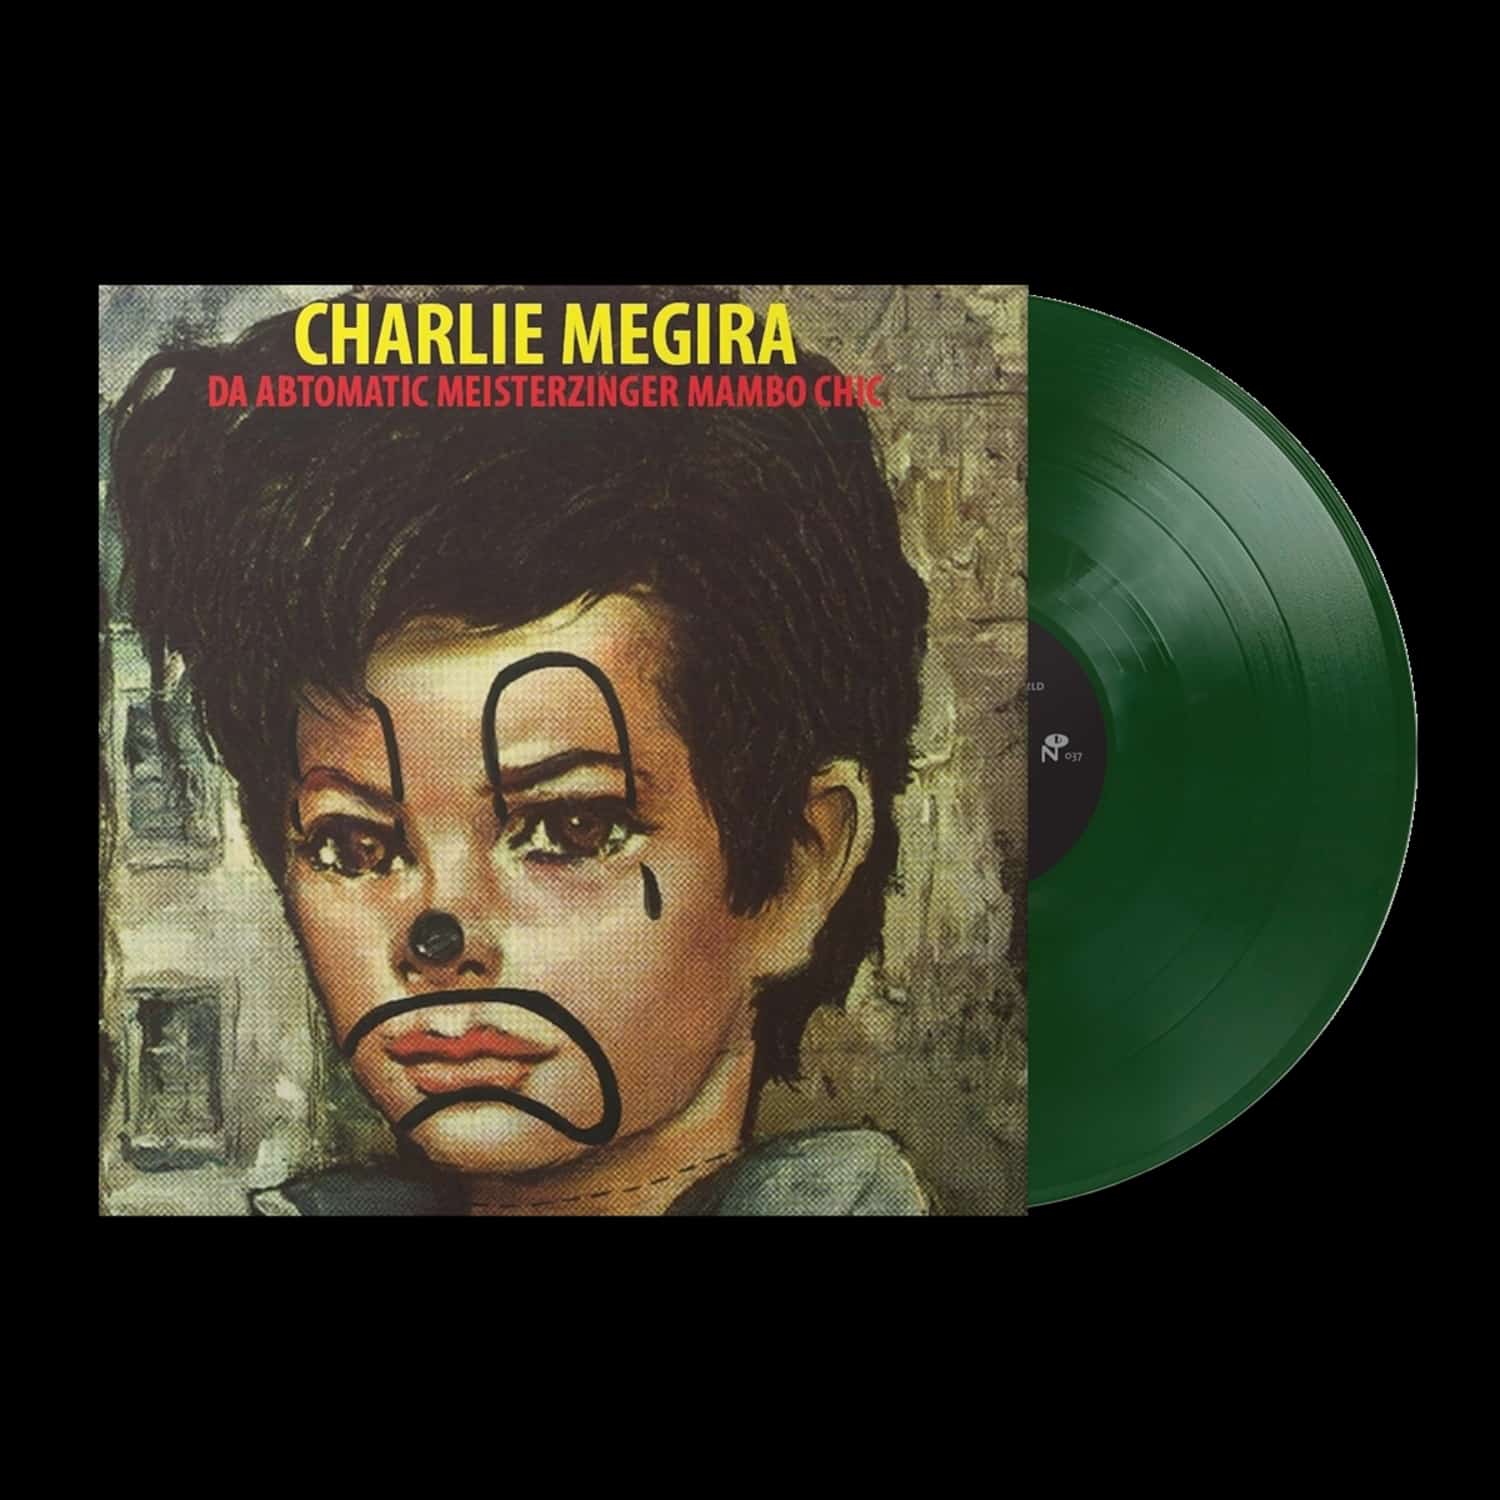 Charlie Megira - THE ABTOMATIC MIESTERZINGER MAMBO CHIC 